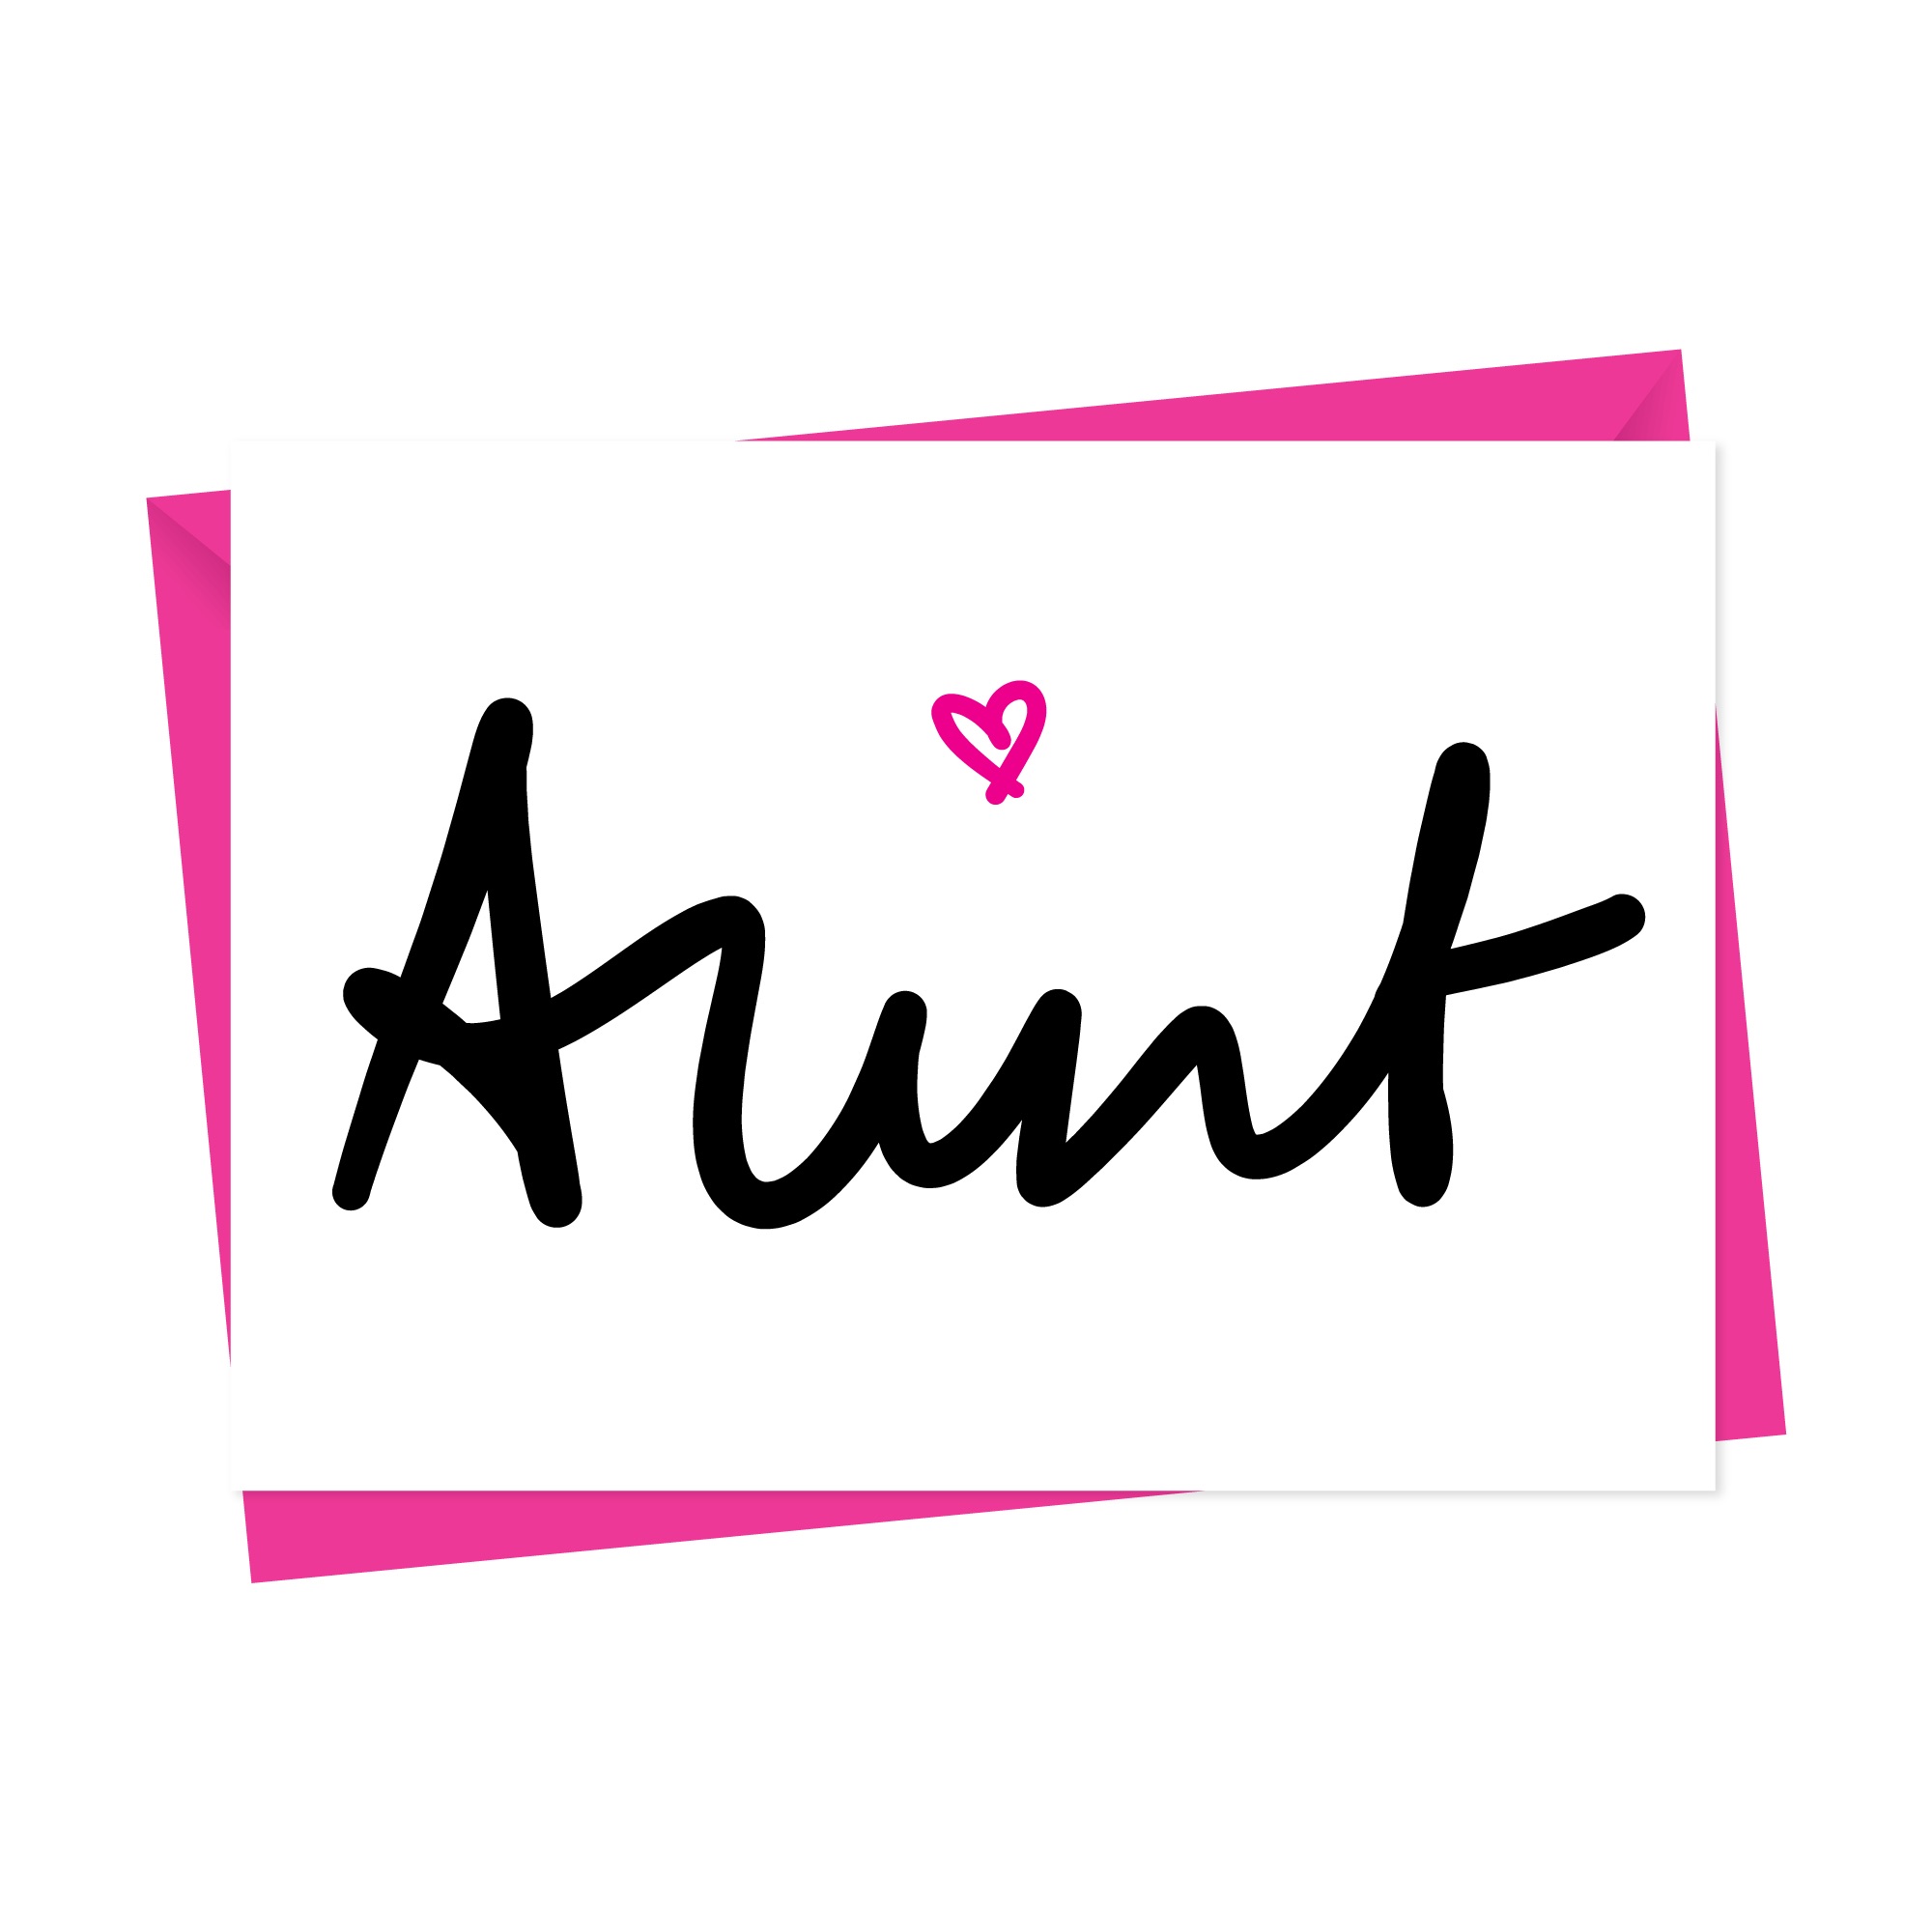 Aunt or Auntie Sketch Birthday Card